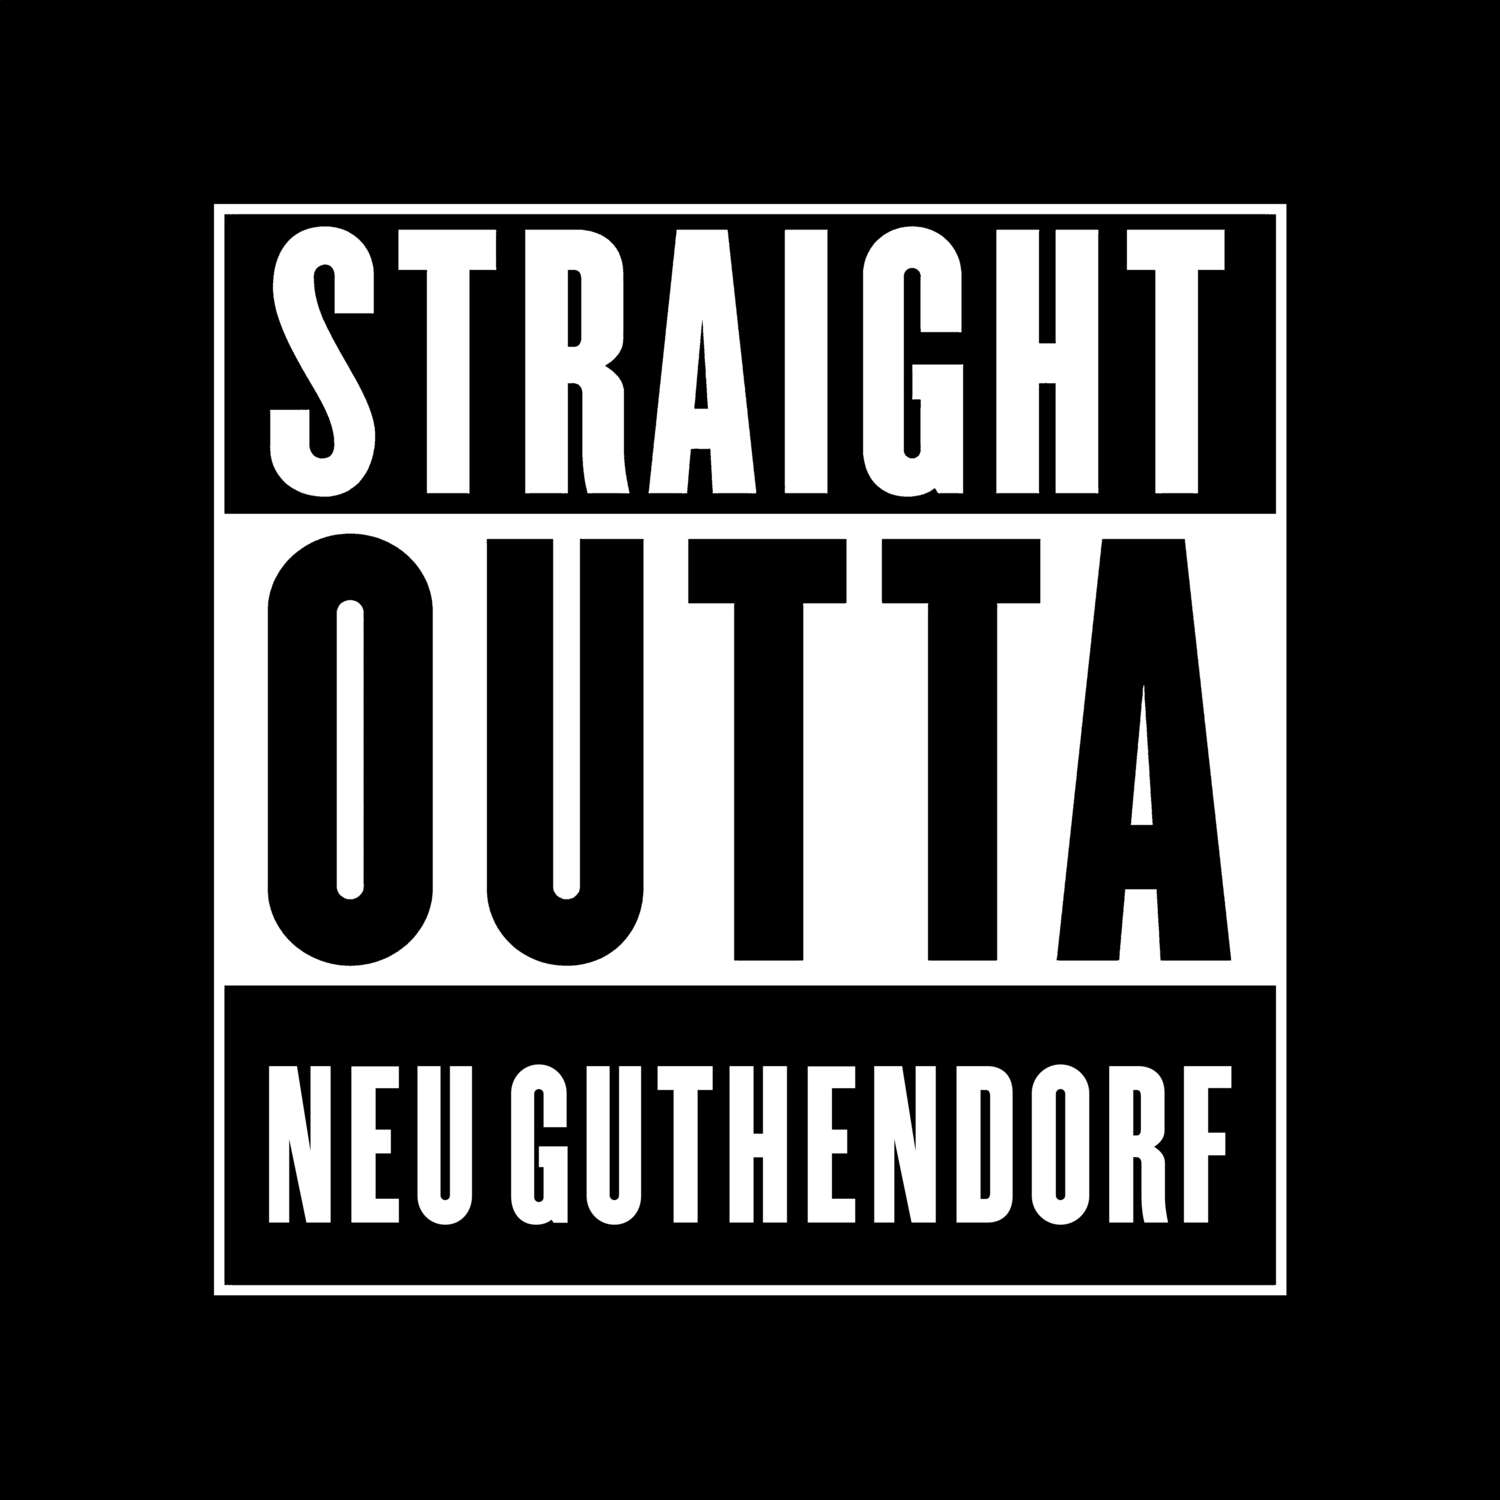 Neu Guthendorf T-Shirt »Straight Outta«